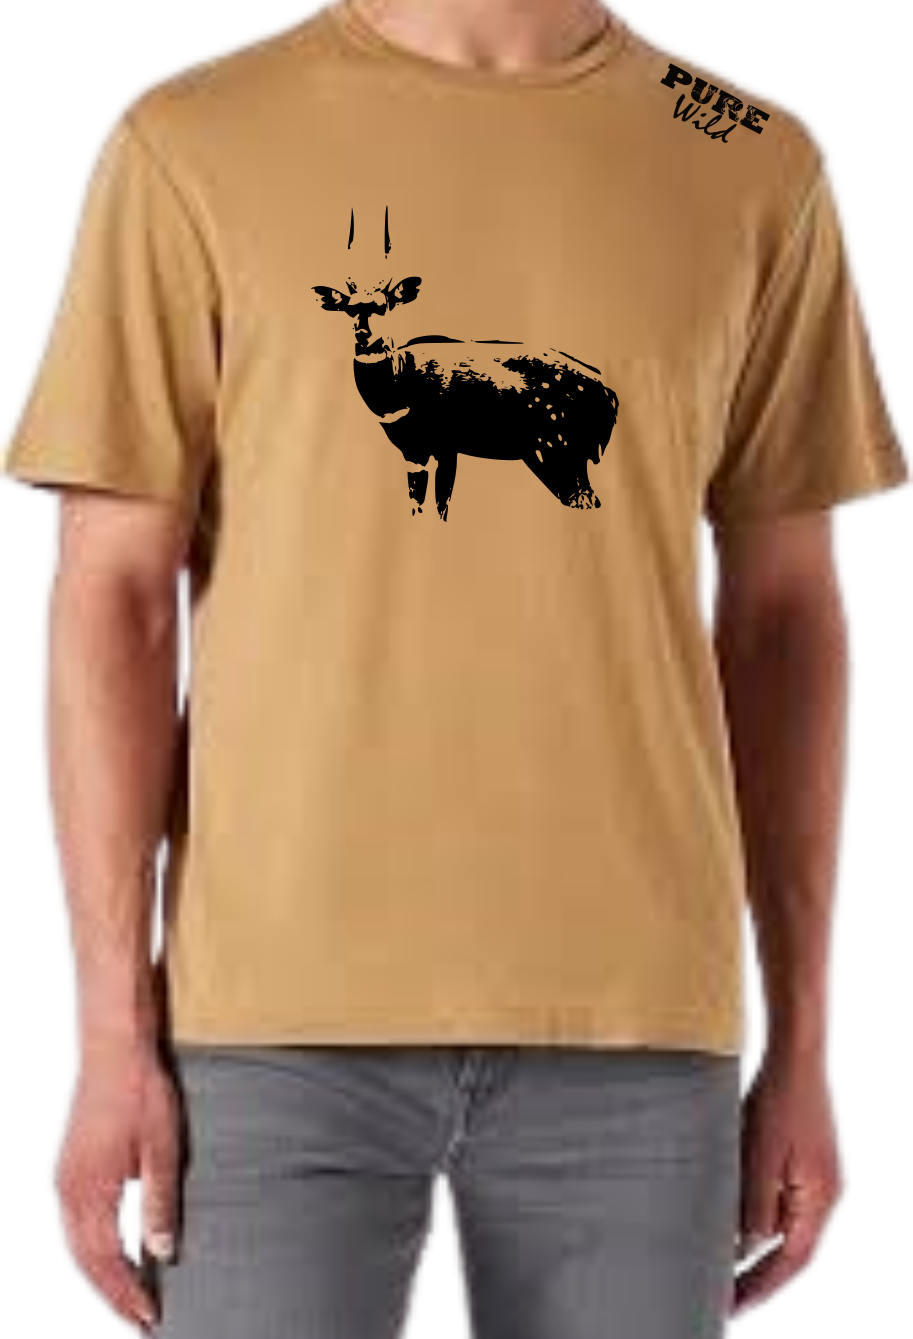 Bushbuck T-Shirt For A Real Man